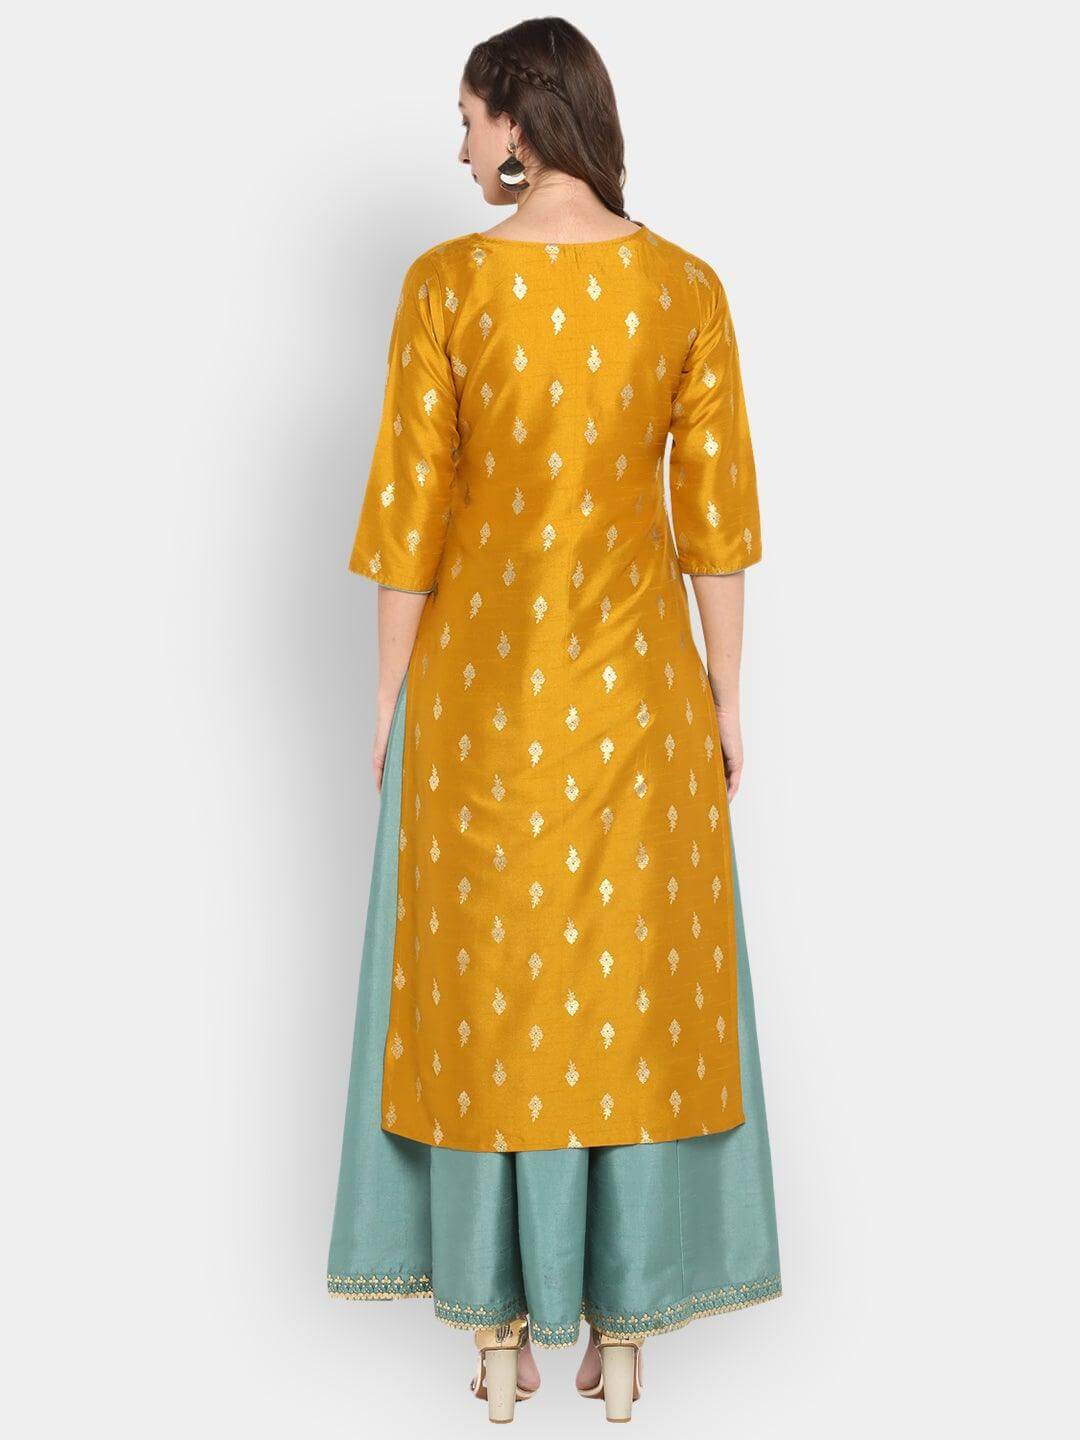 Light Green Poly Silk Gold Print Anarkali Ethnic Dress Janasya